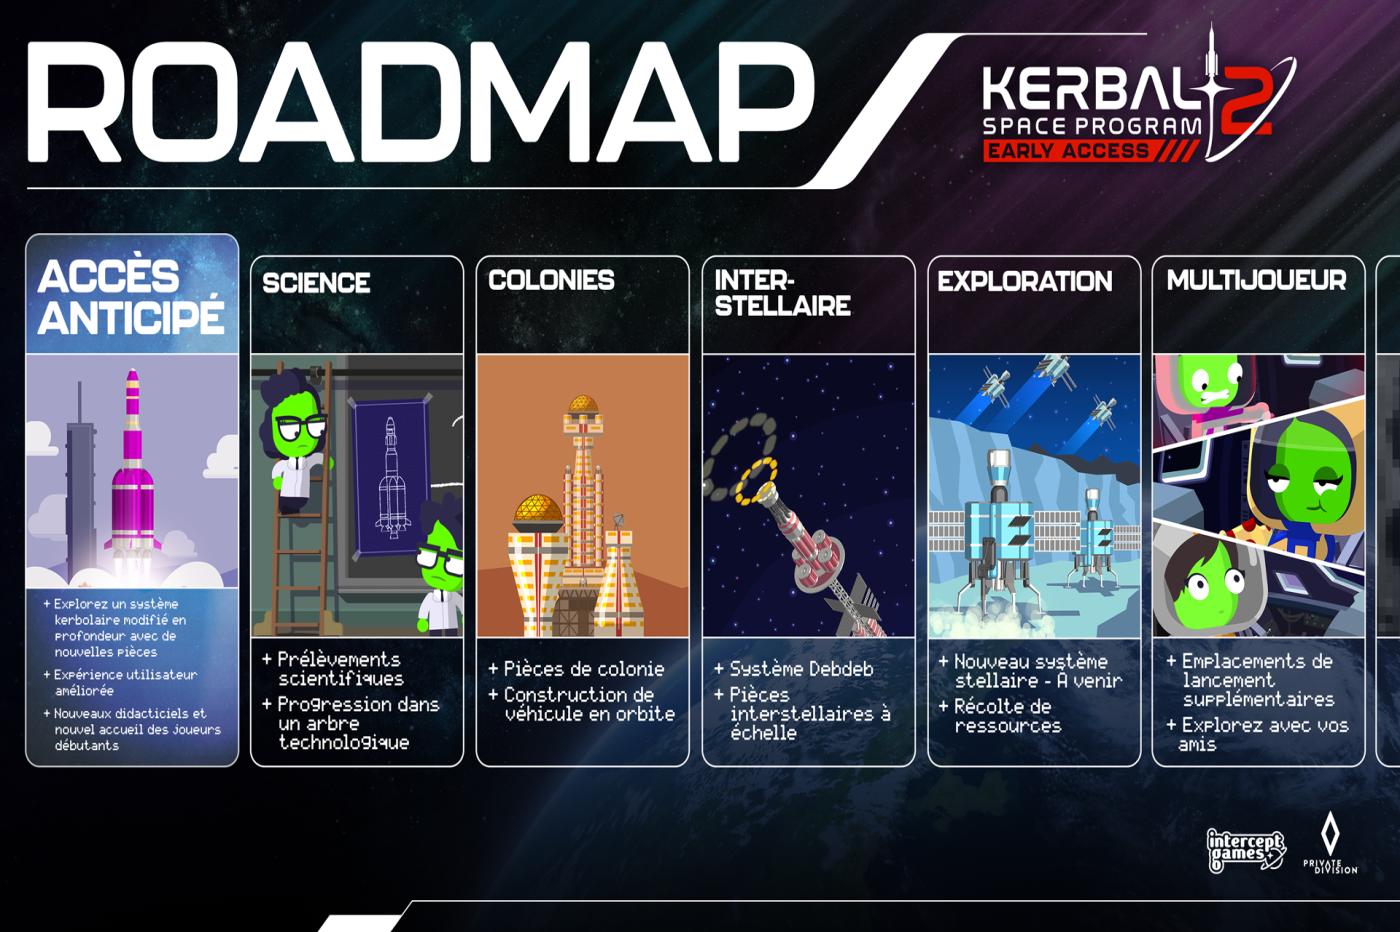 the KSP 2 development roadmap